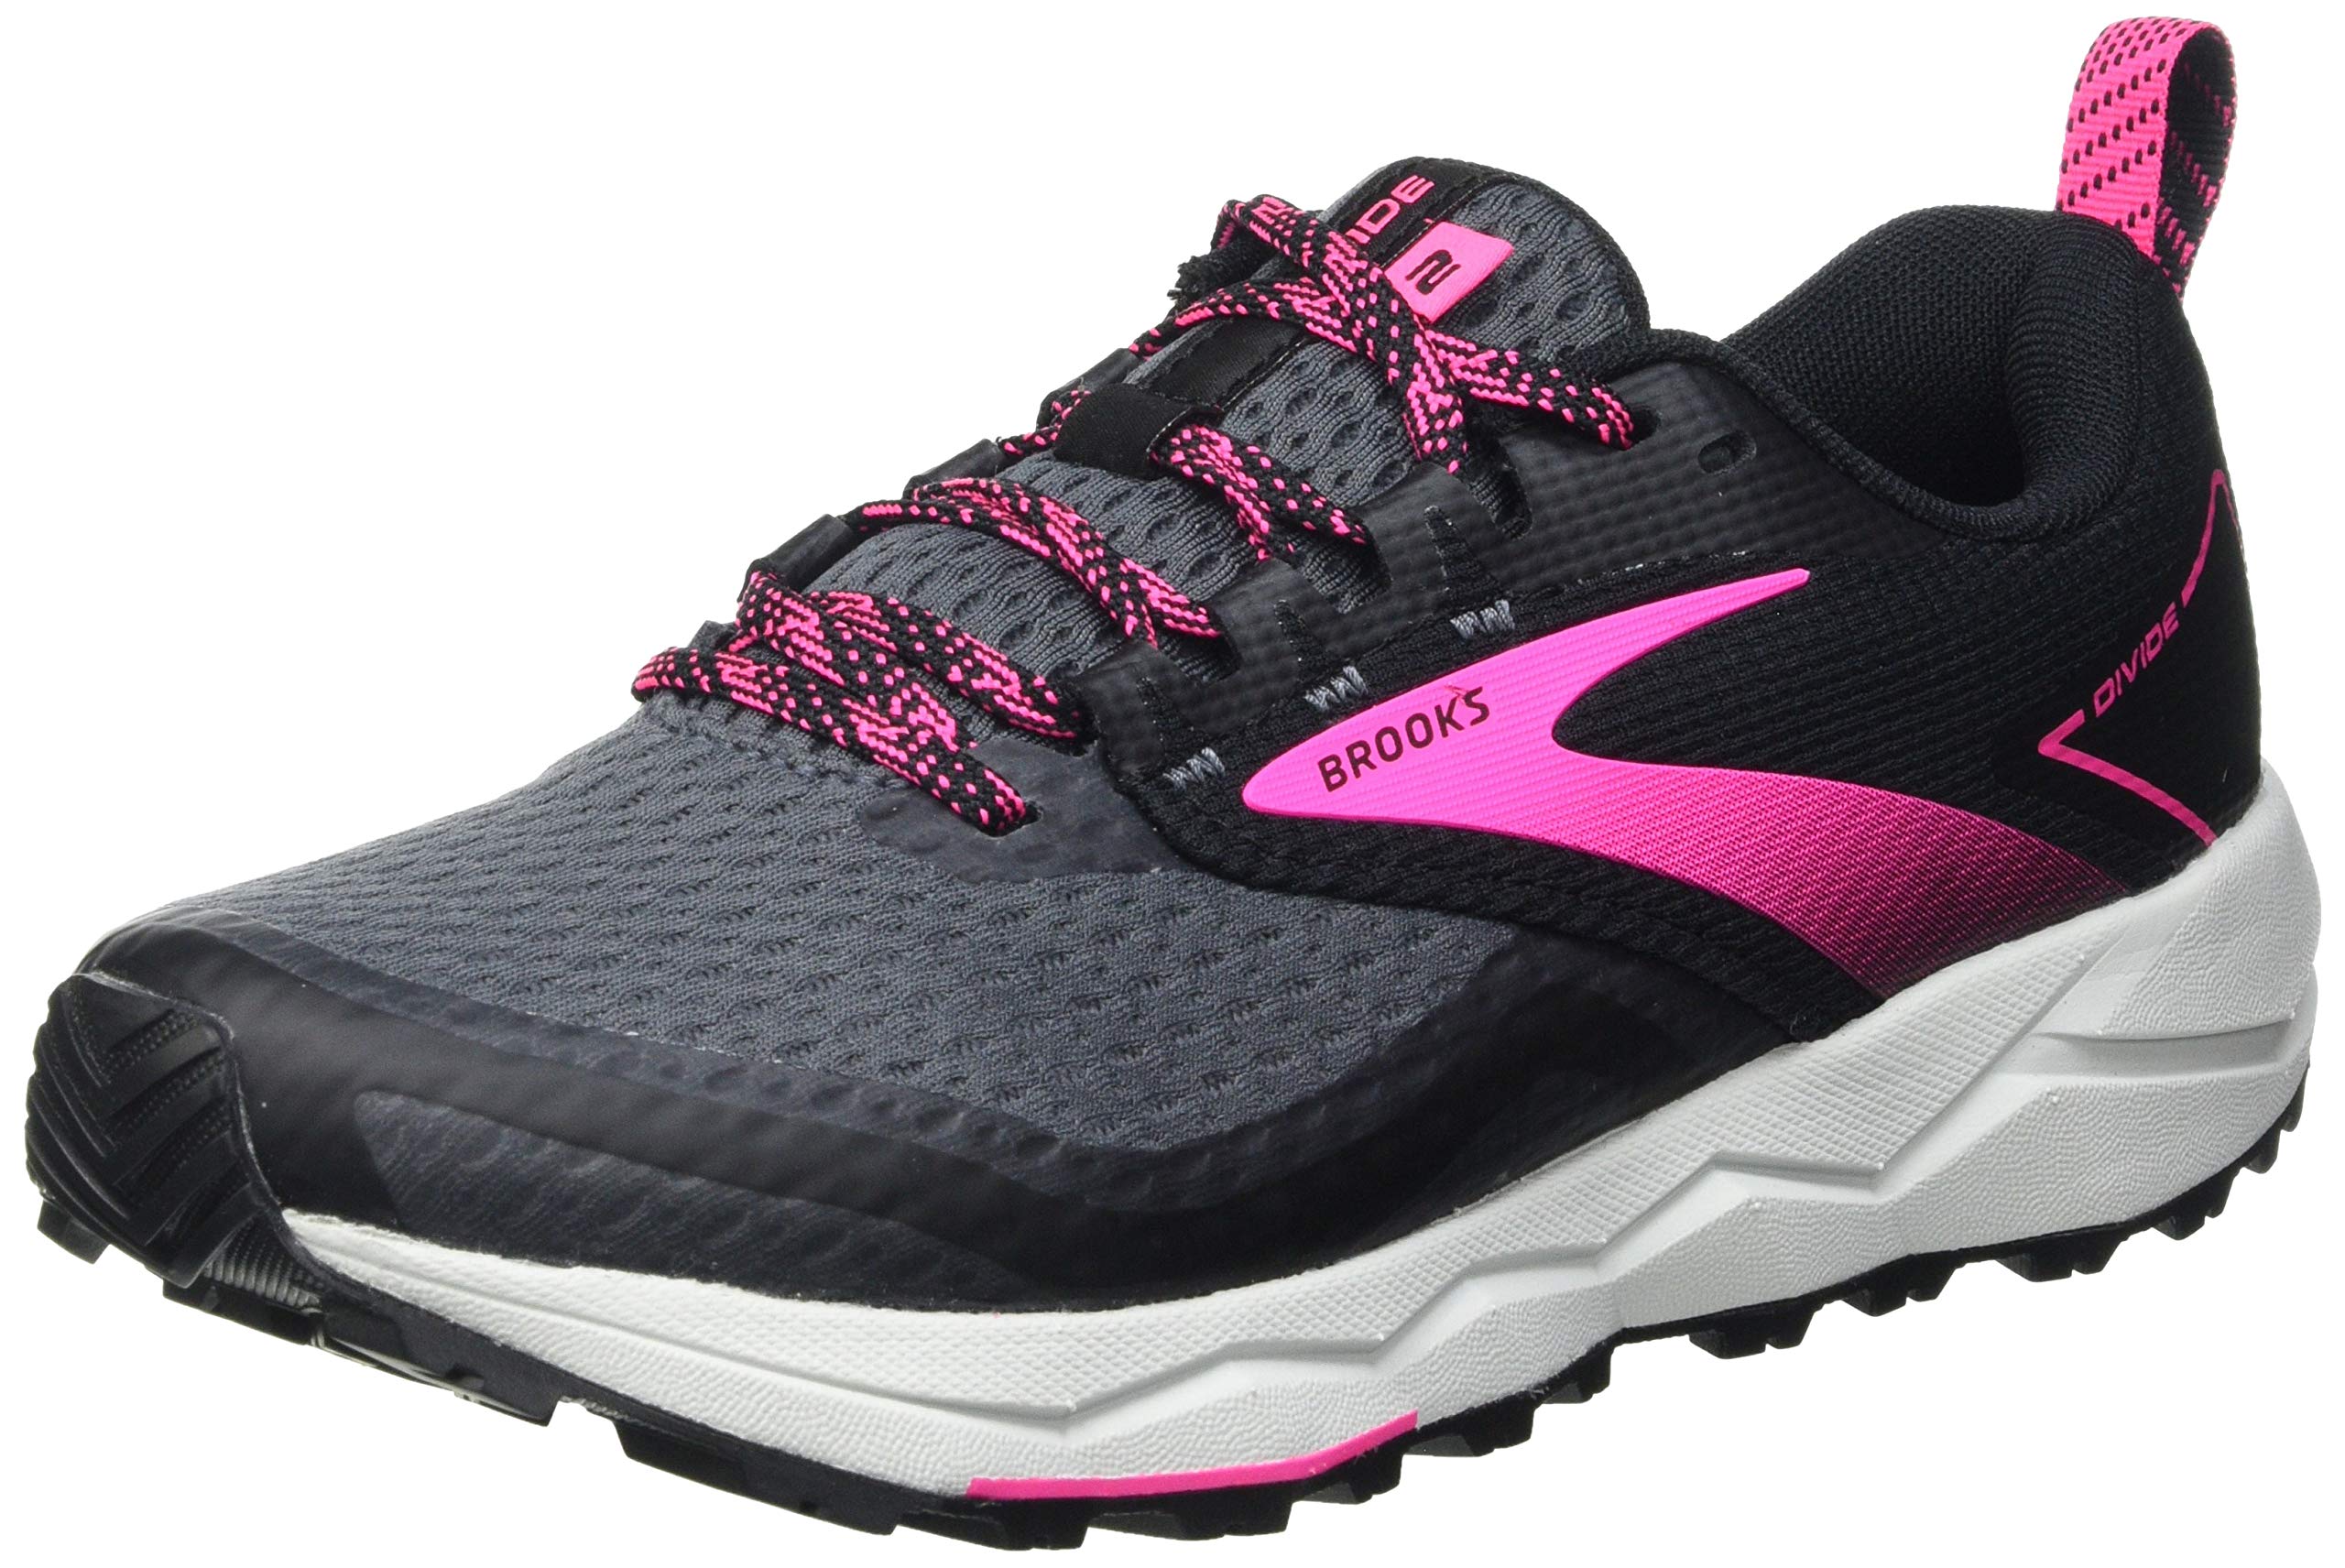 Brooks Womens Divide 2 Trail Running Shoe - Black/Ebony/Pink - 9.5